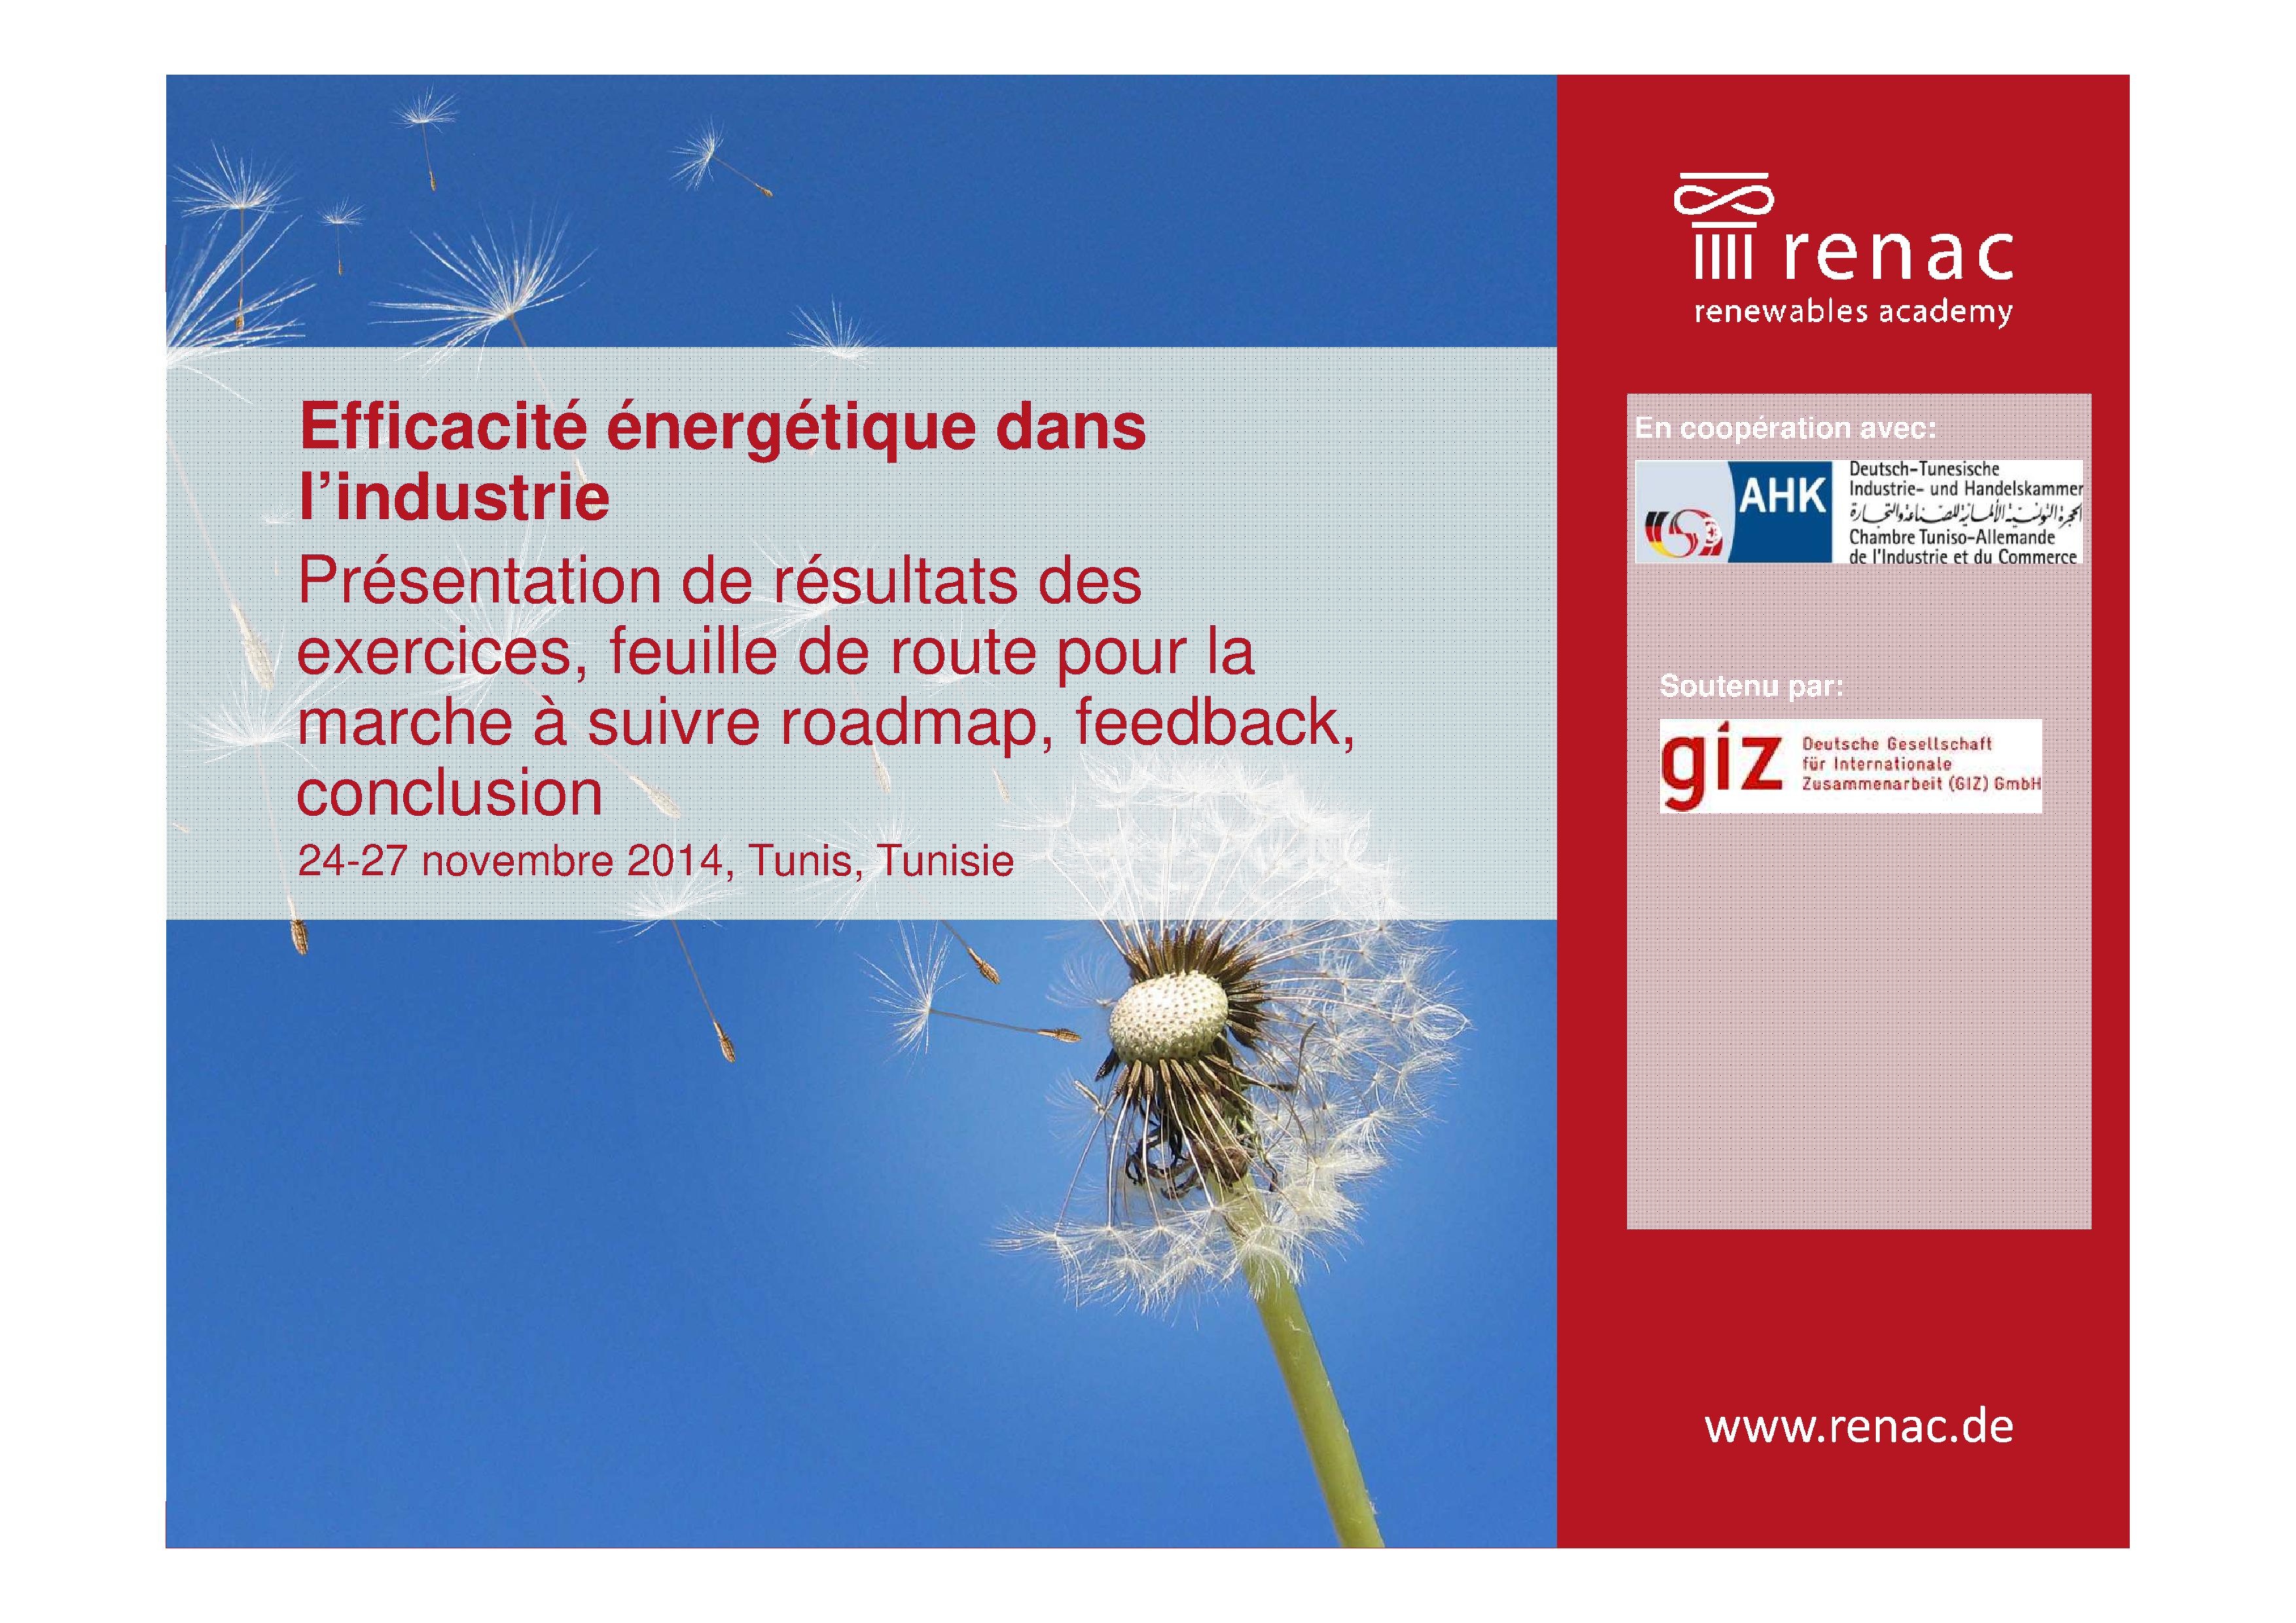 (16) Energy efficiency in industrial process: financing instruments